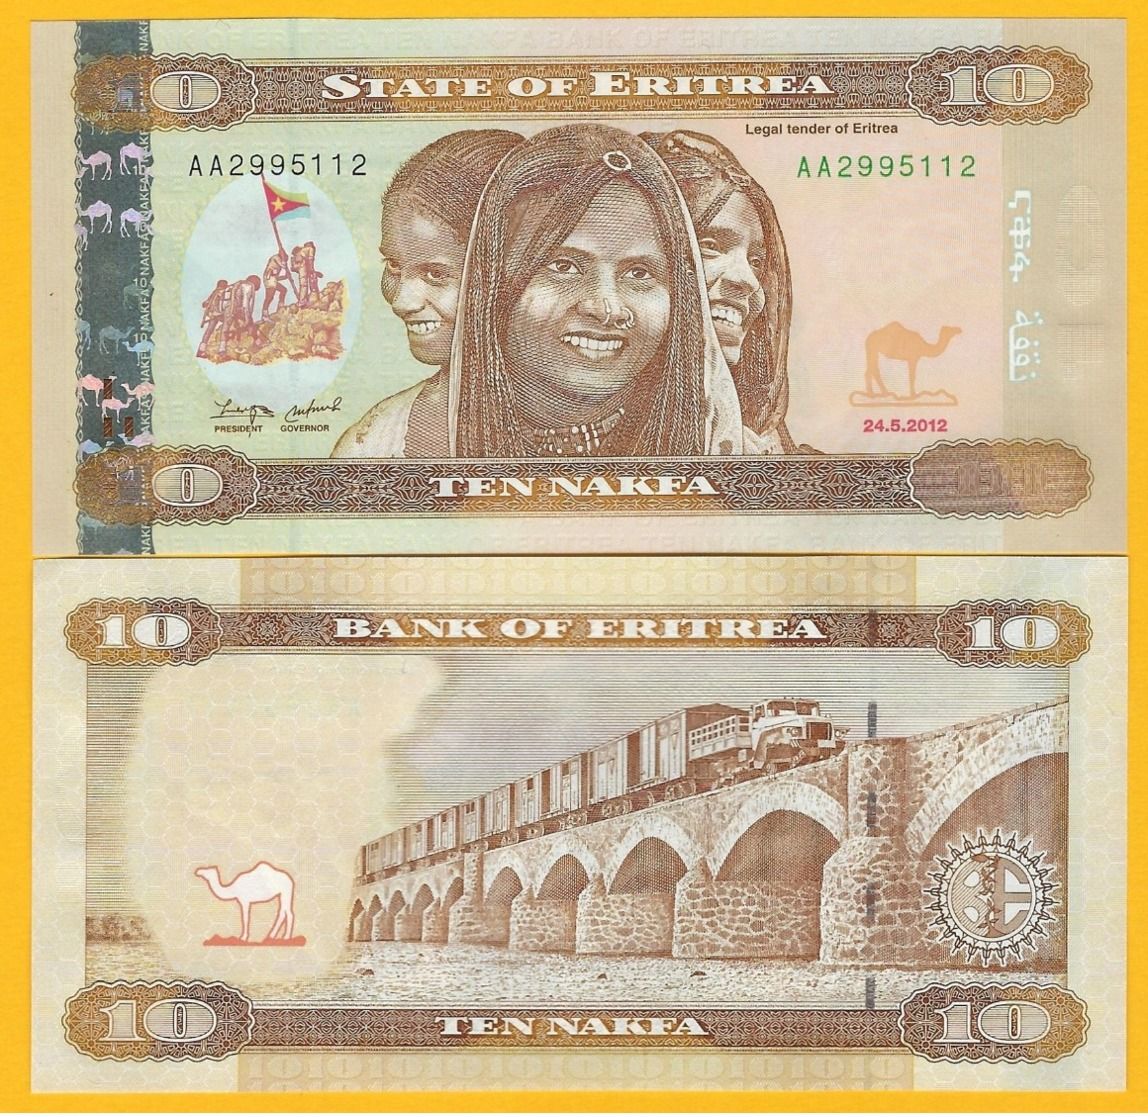 Eritrea 10 Nakfa P-11 2012 UNC Banknote - Eritrea